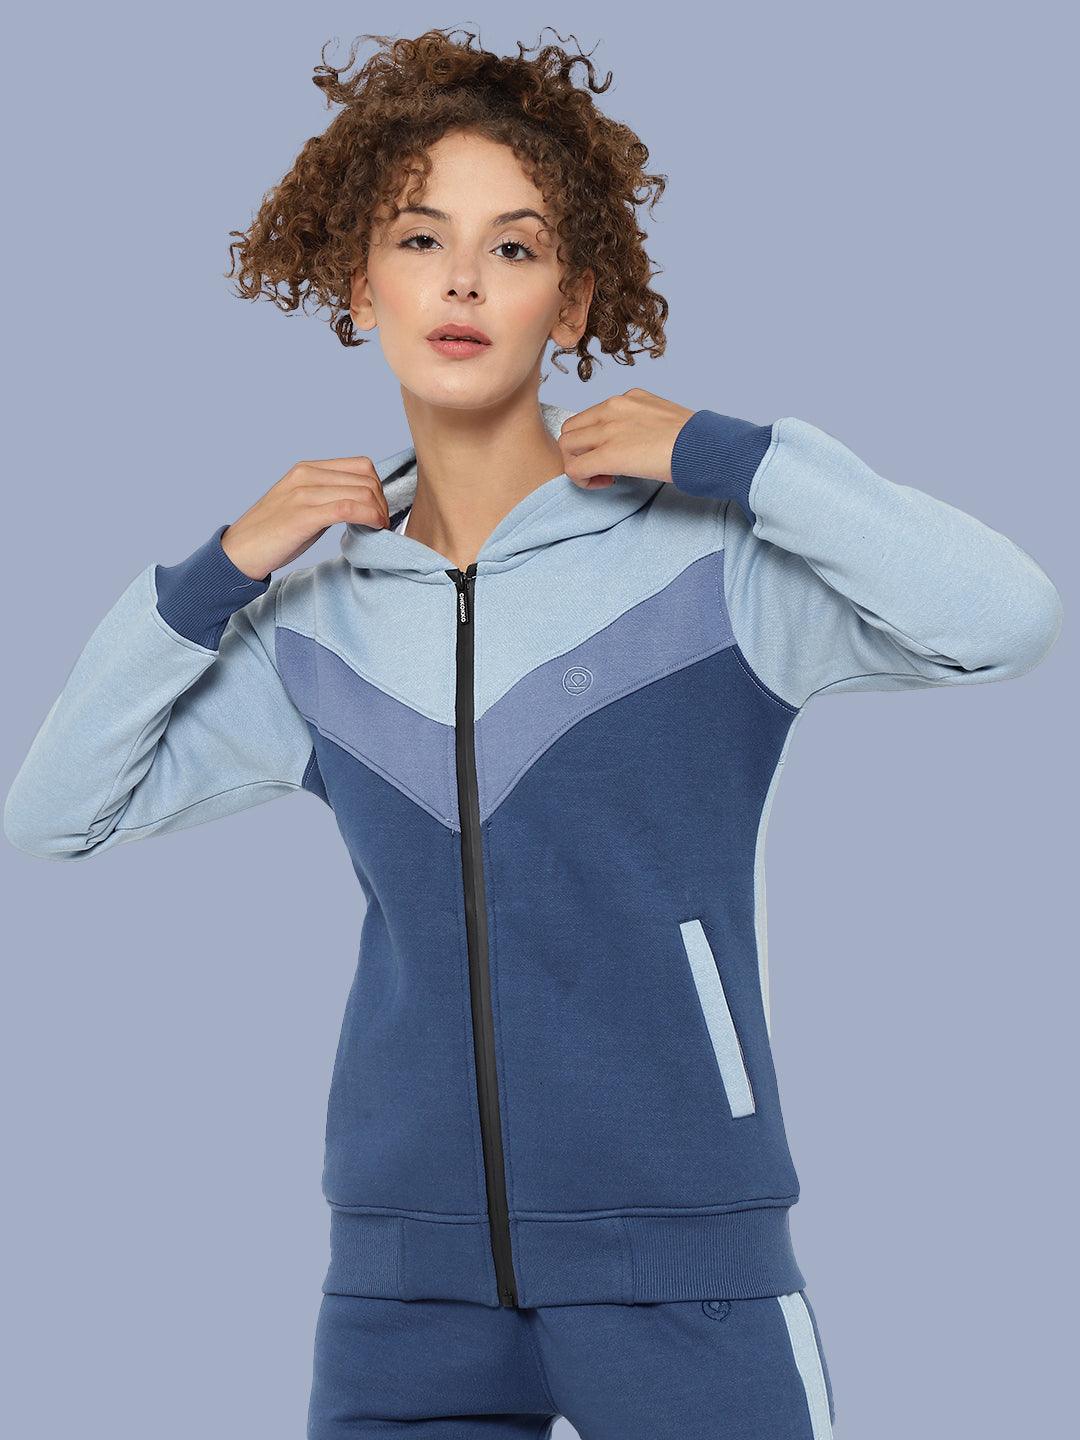 Women's Sports Gym Hooded Zipper Jacket | CHKOKKO - Chkokko